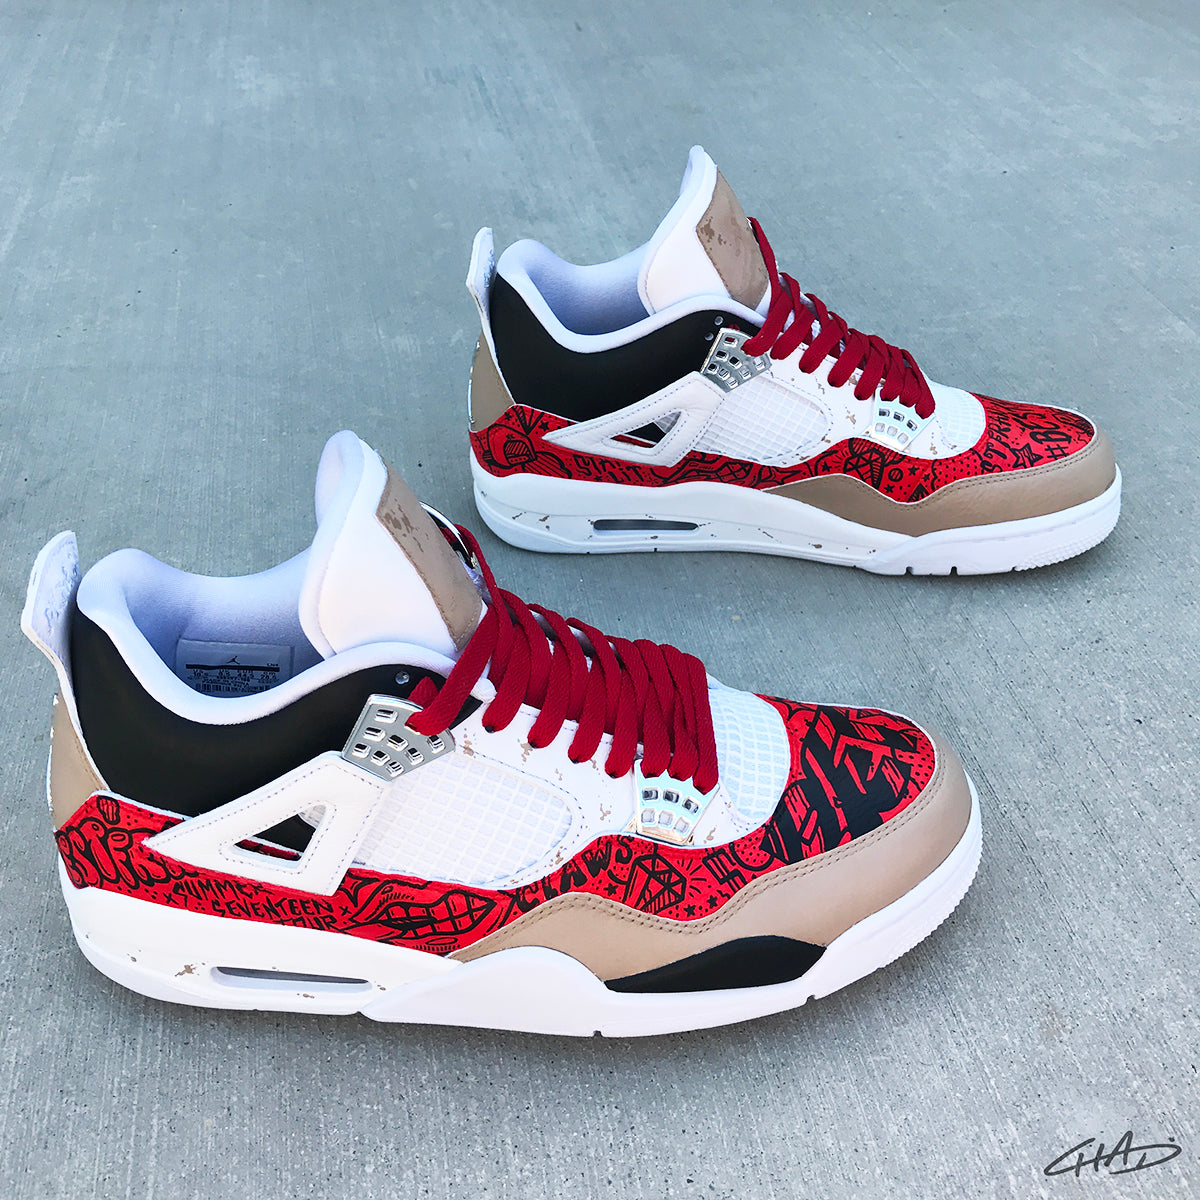 Kendall Kyndall Burrr's - Nike Jordan retro shoes